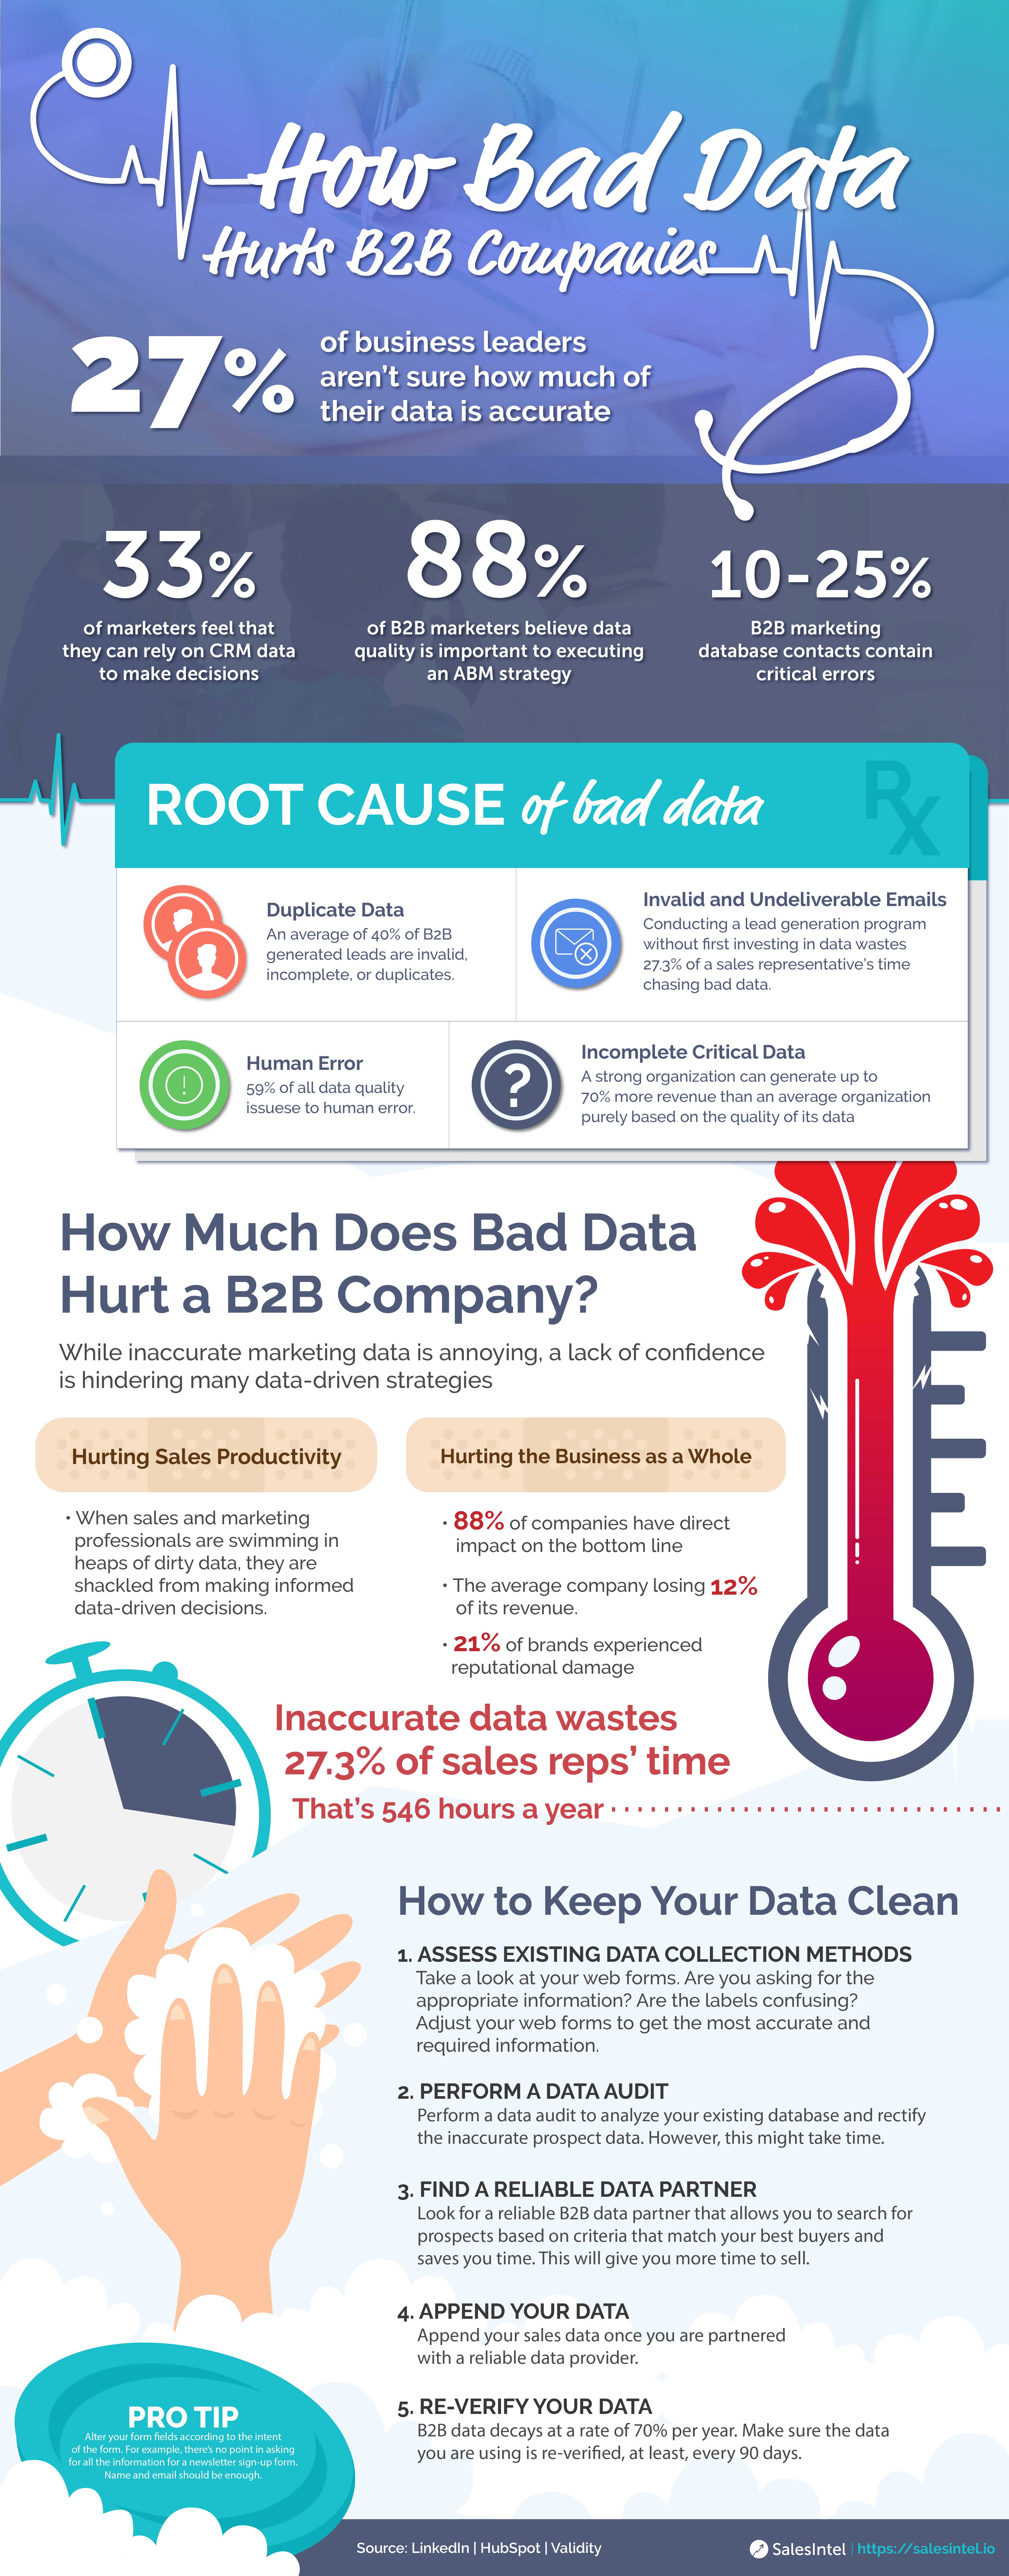 How-Bad-Data-Hurts-B2B-Companies